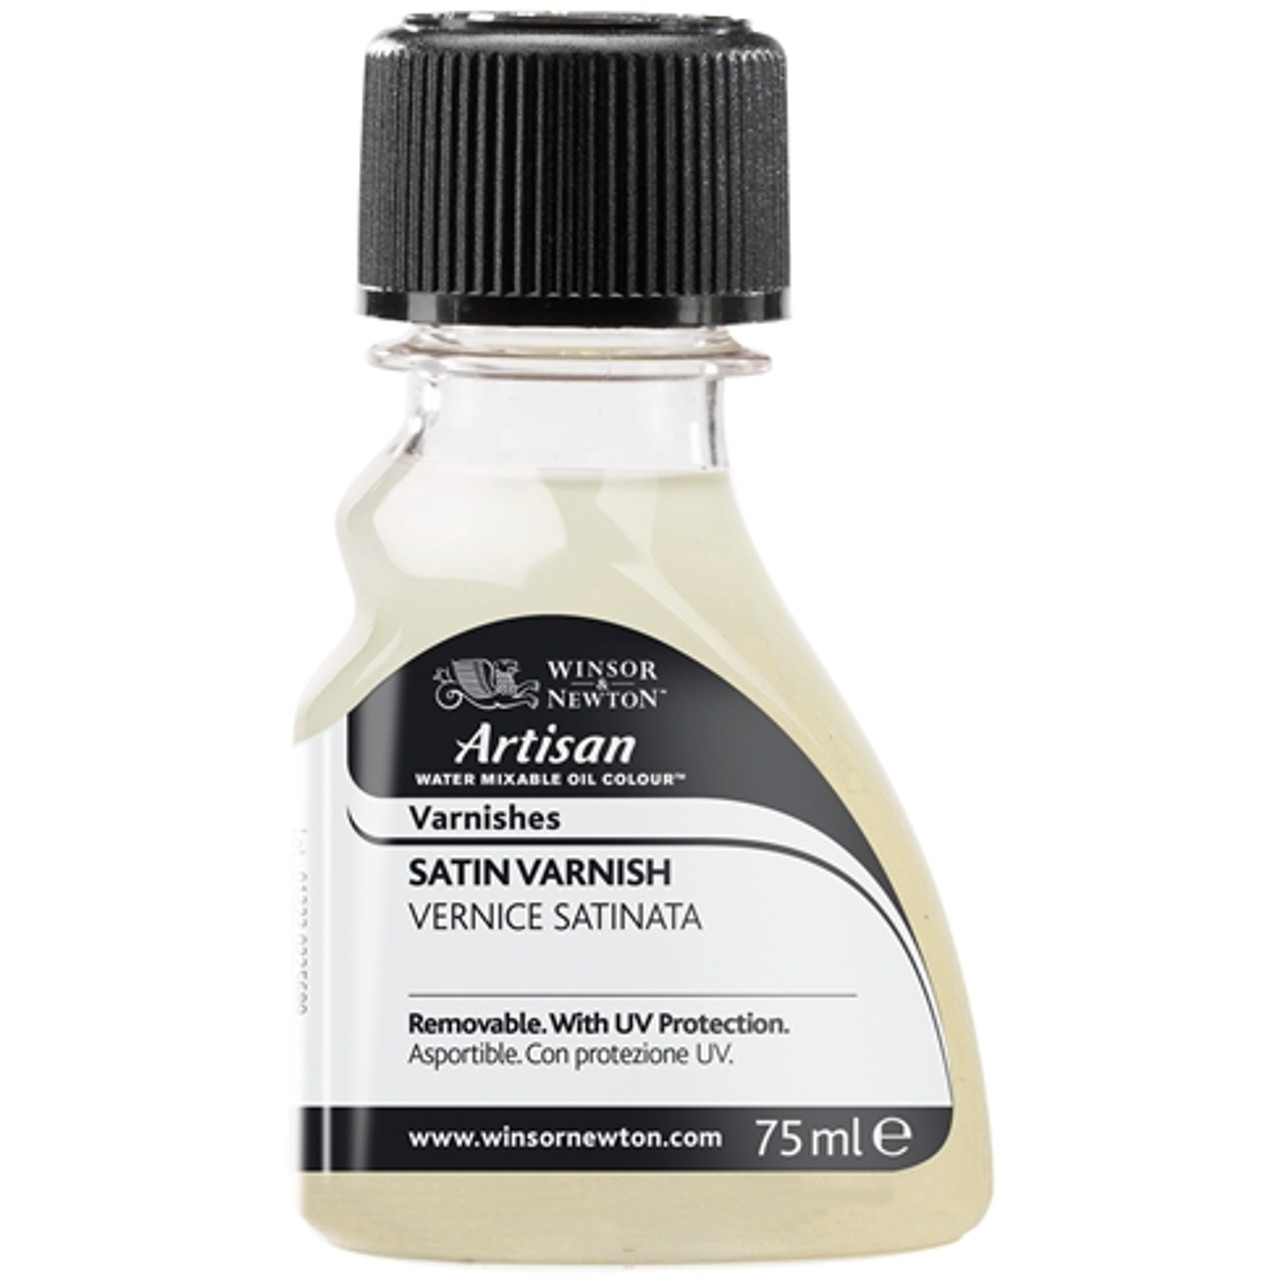 Artisan Water Mixable Varnish, Satin, 75ml